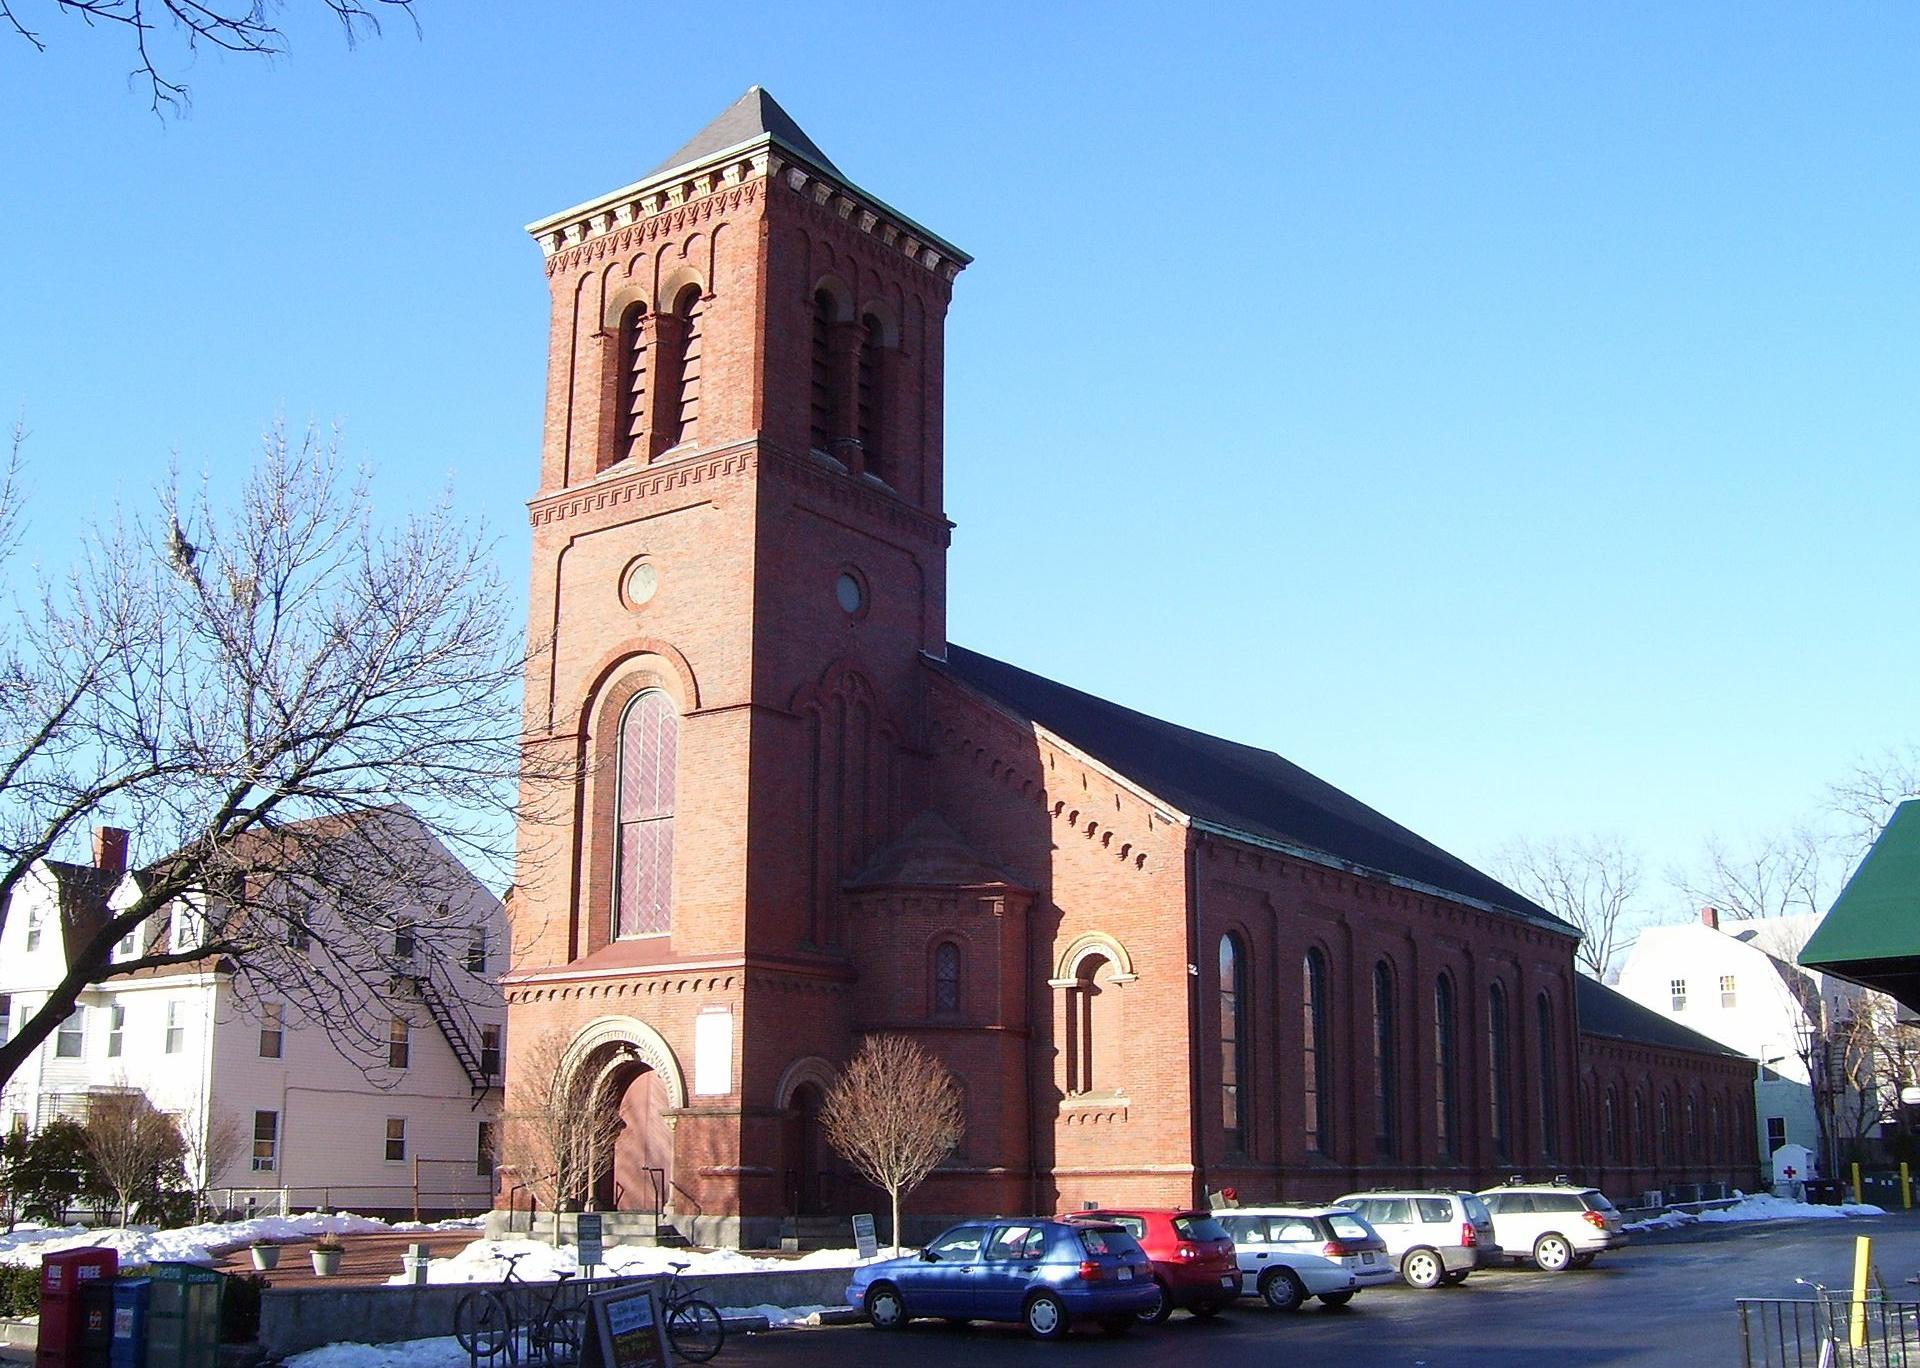 Christ the King Presbyterian Church in Cambridge, Massachusetts